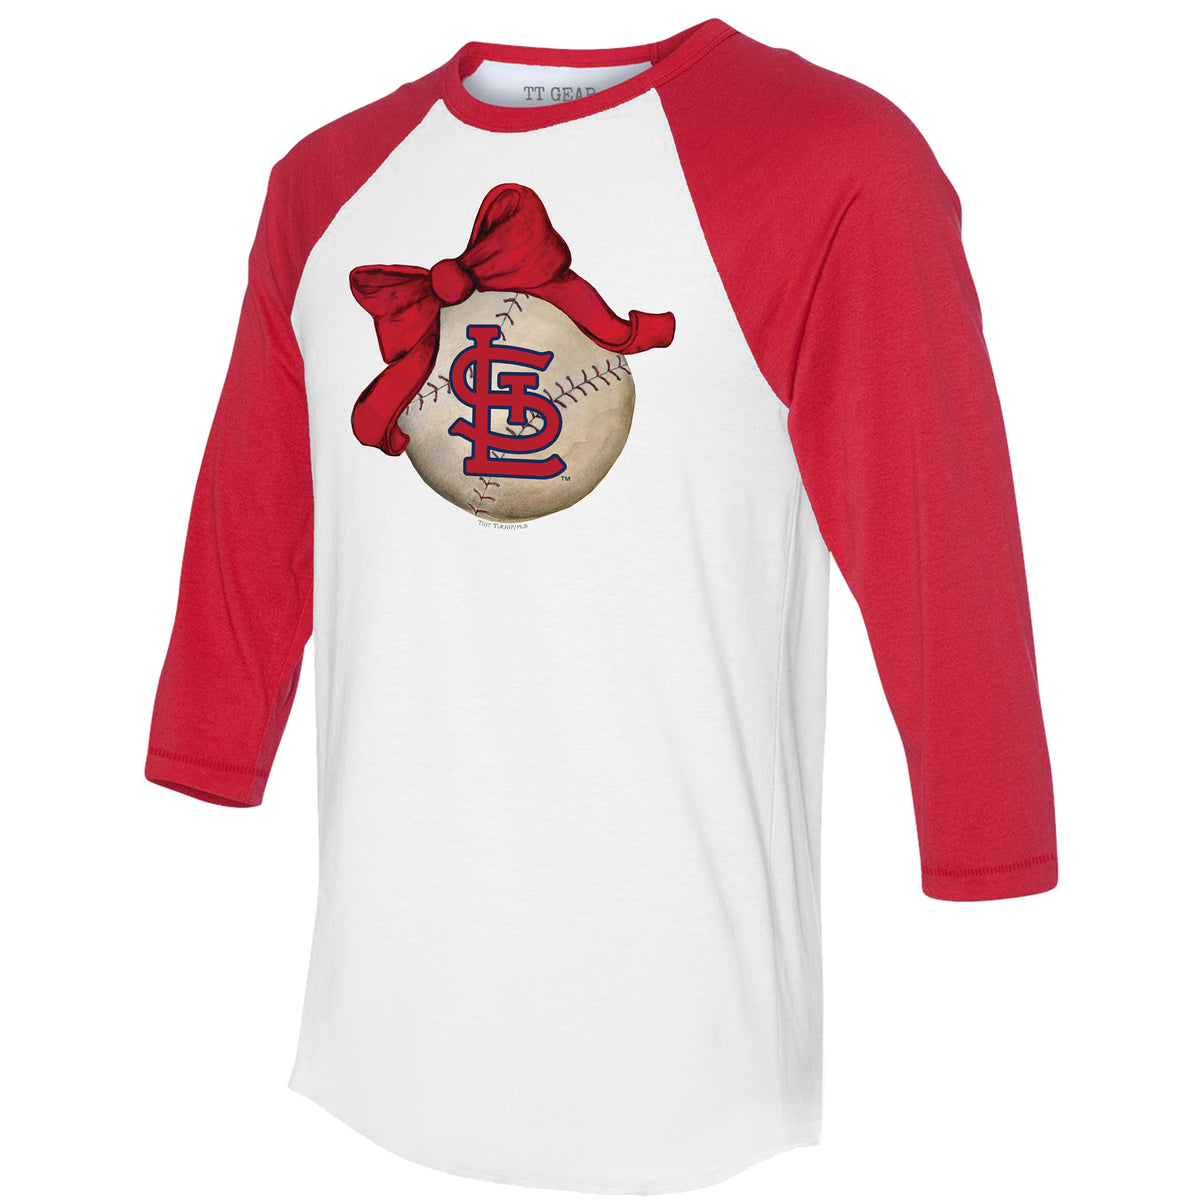 St. Louis Cardinals Baseball Bow Tee Shirt Youth XL (12-14) / Red